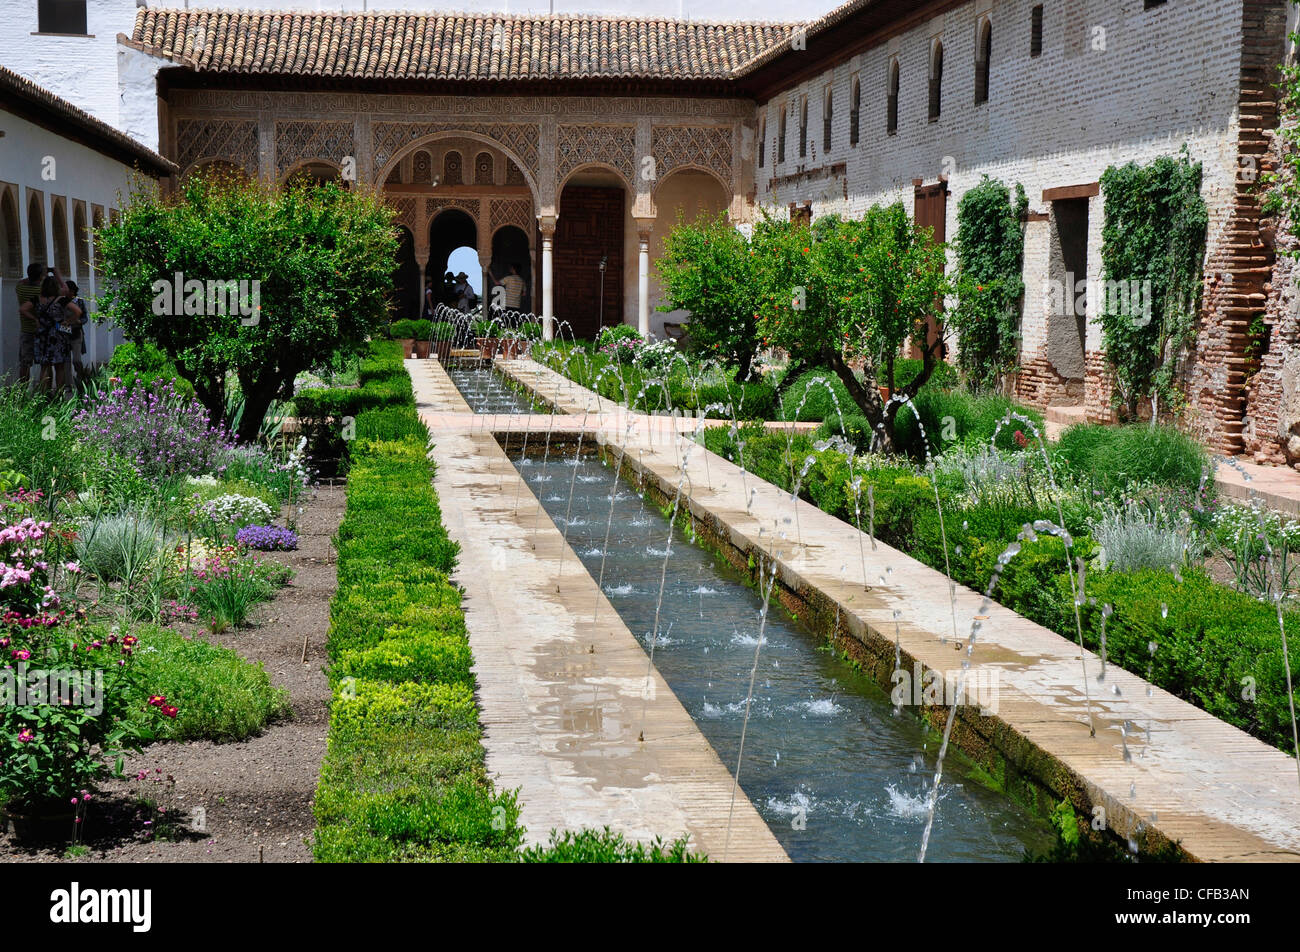 PICTURES: Alhambra in Granada, Spain | Franks Travelbox